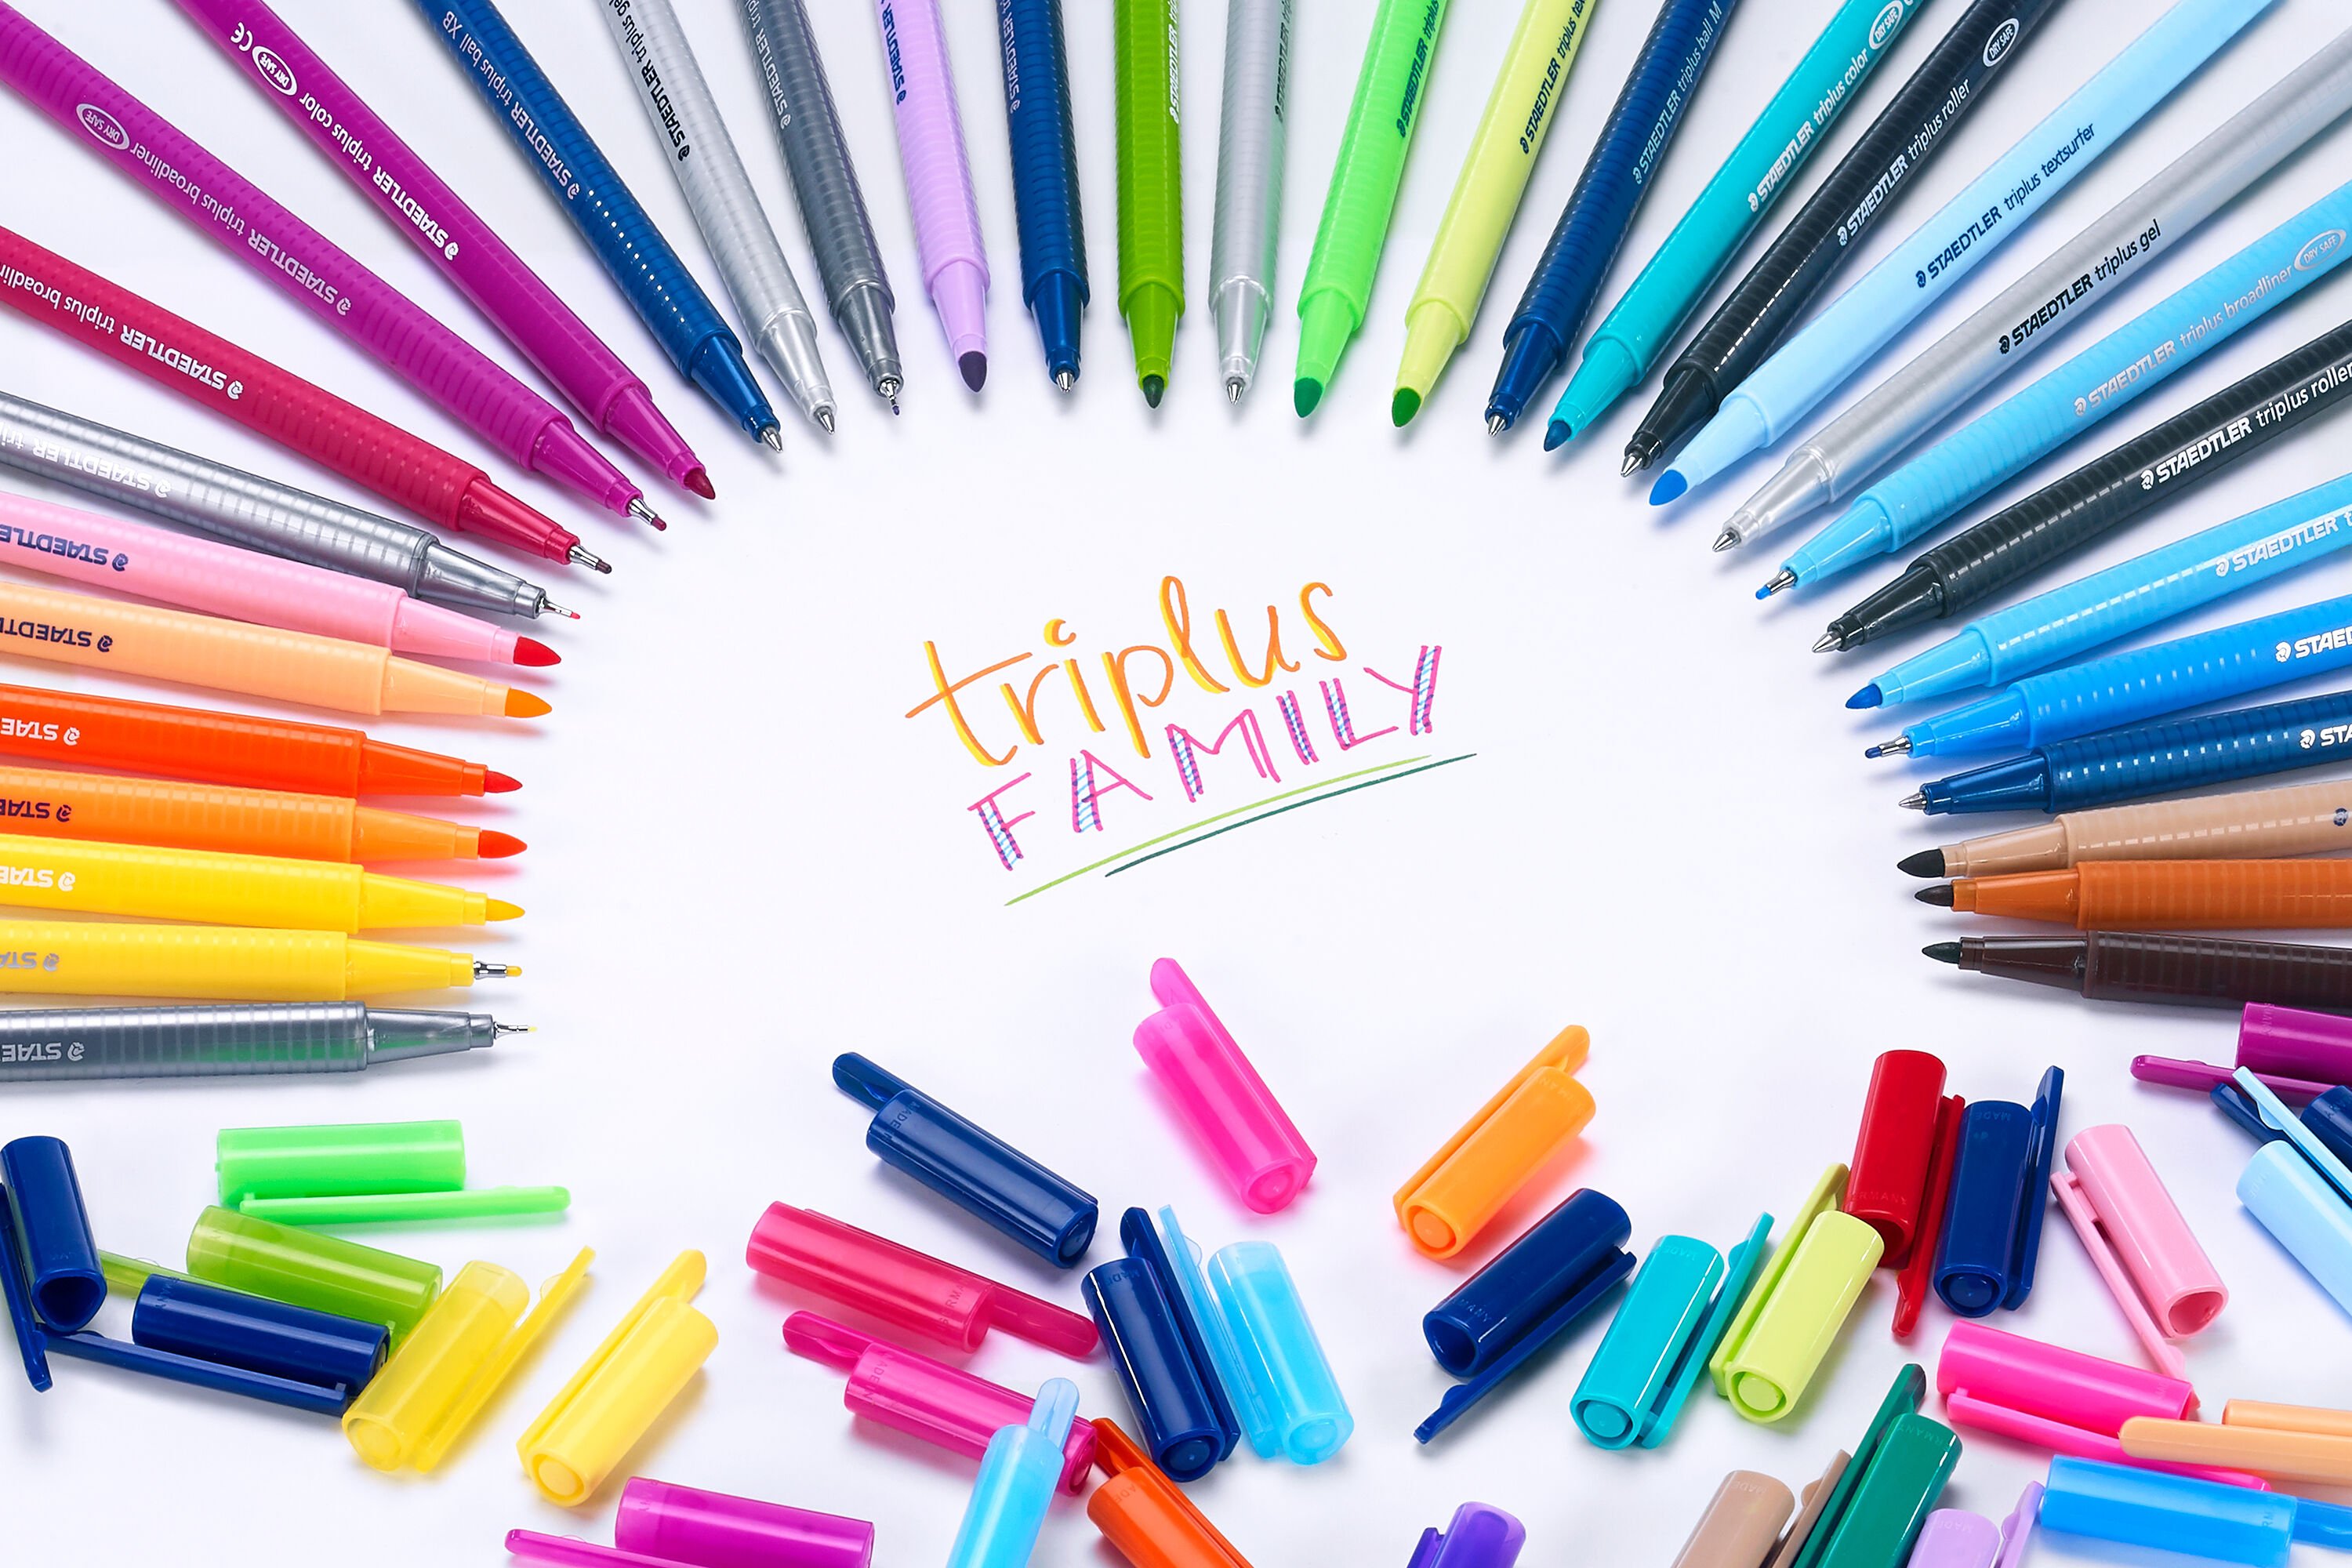 triplus: the ergonomic writing family